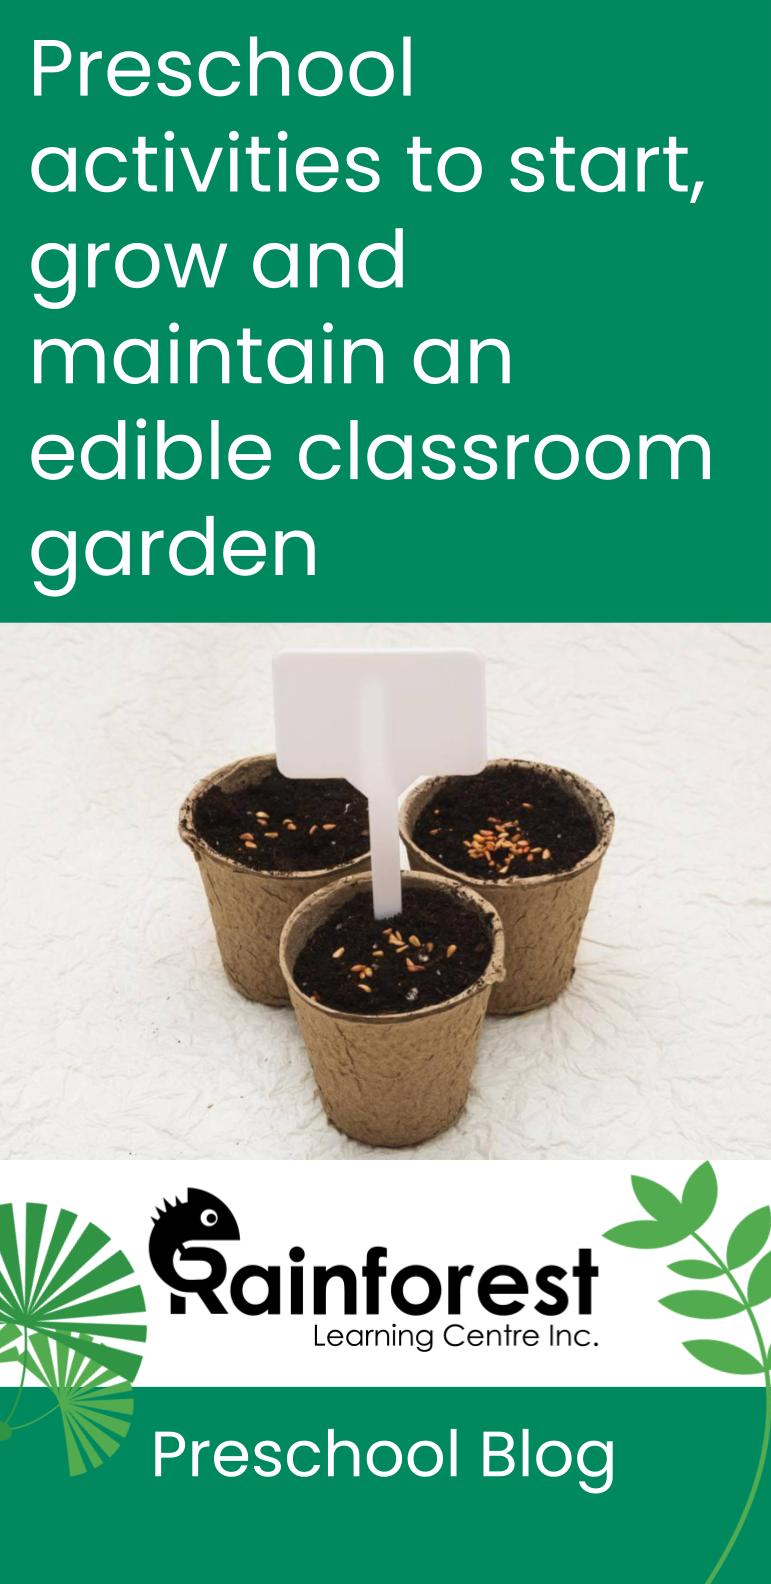 Preschool activities to start grow and maintain an edible classroom garden - blog pinterest image